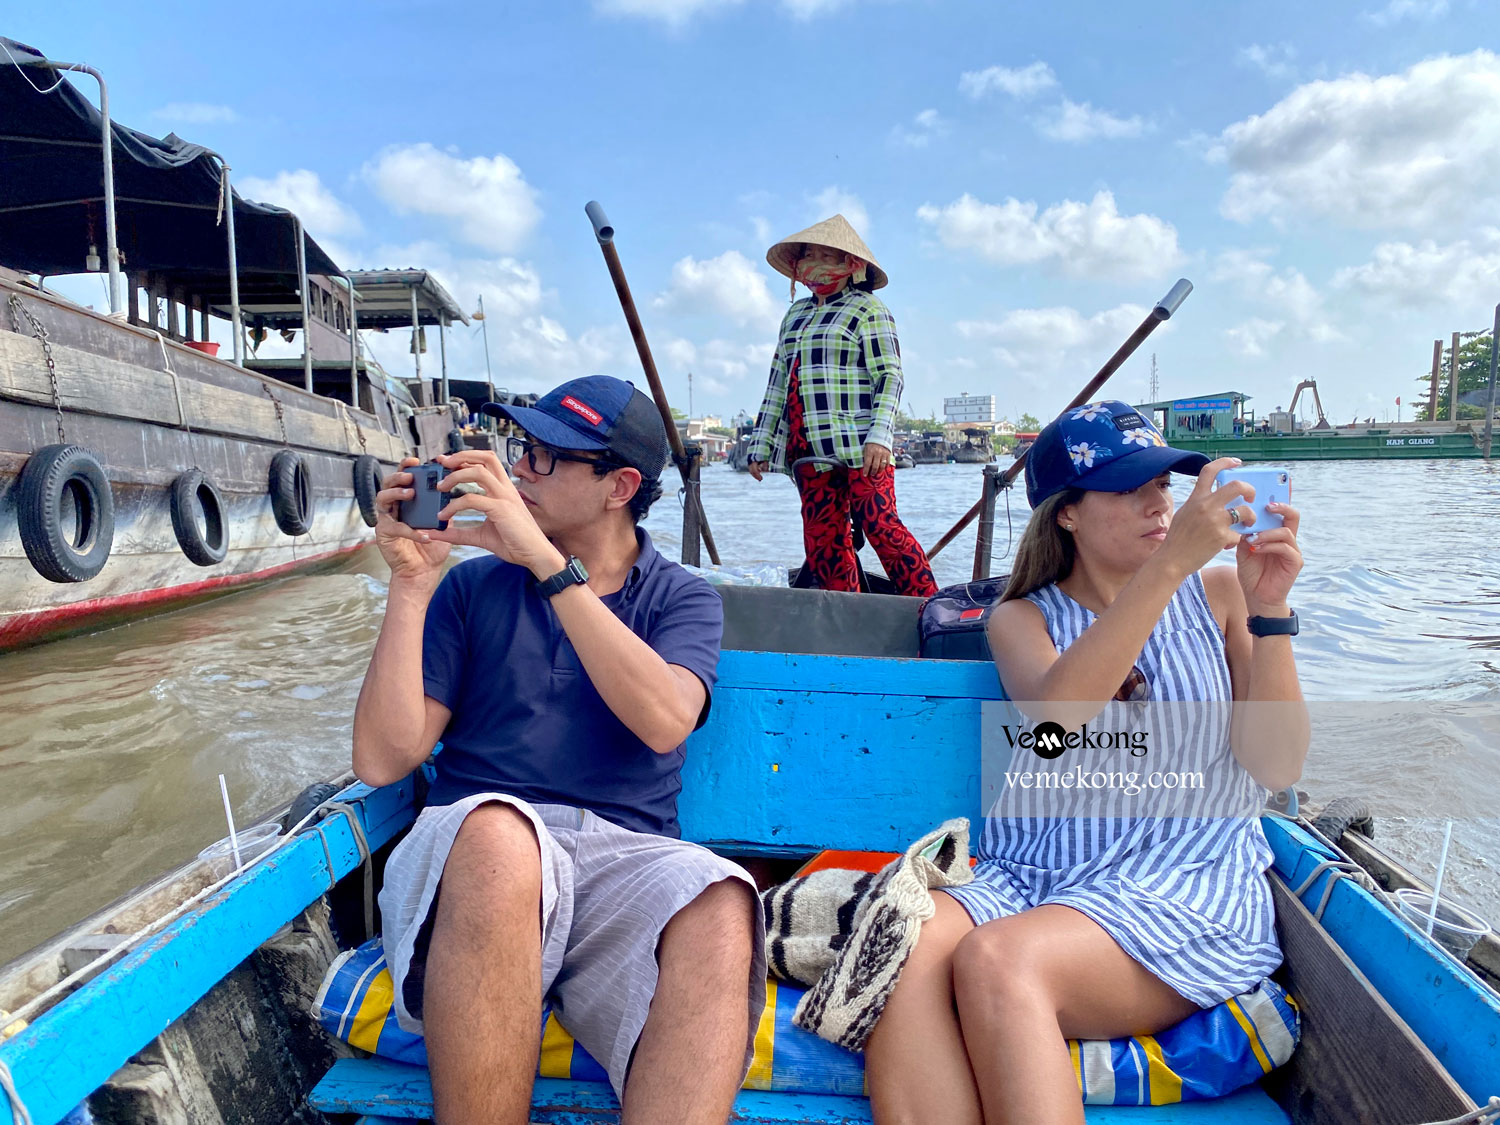 cai rang floating market day tour